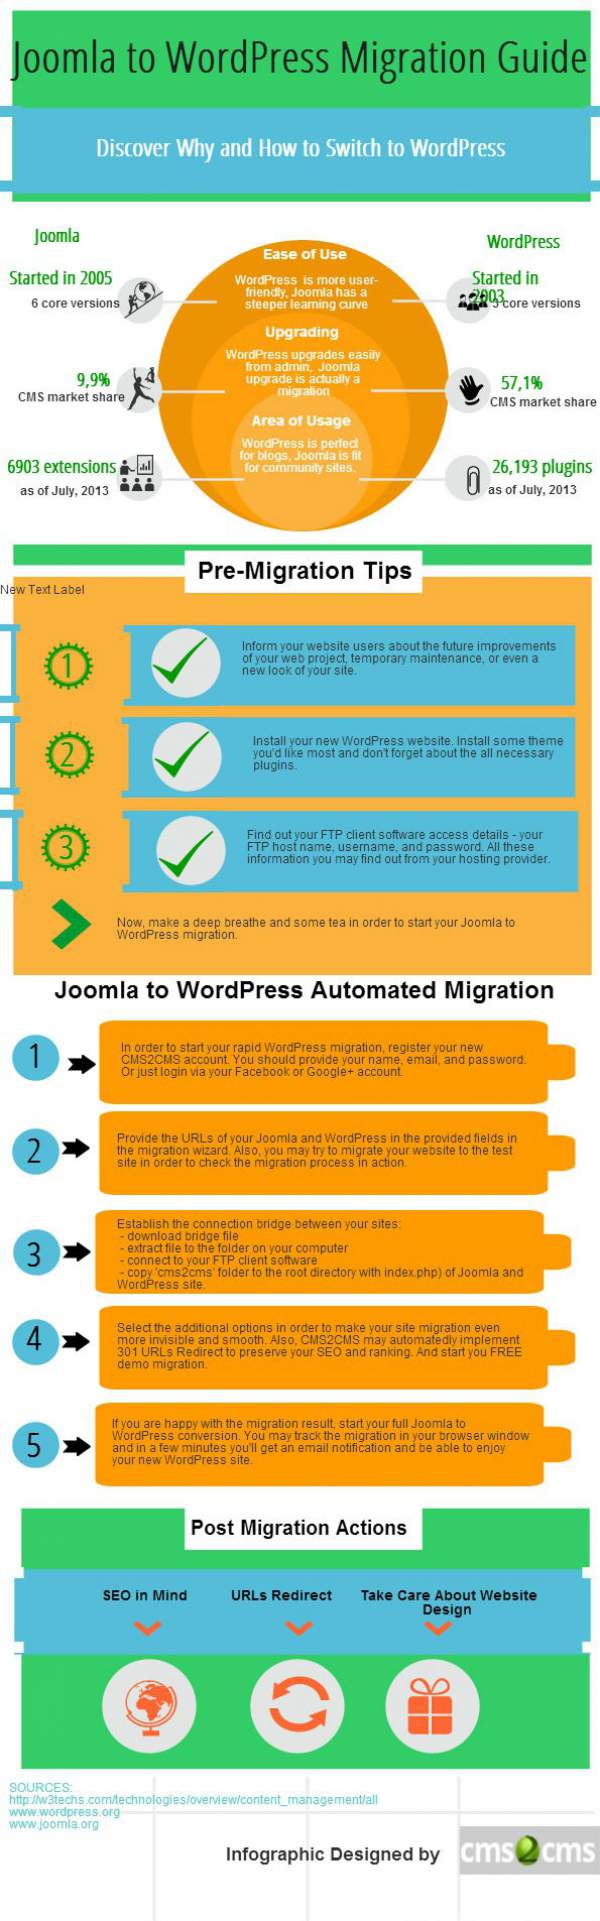 Joomla to WordPress Migration Rich in Details